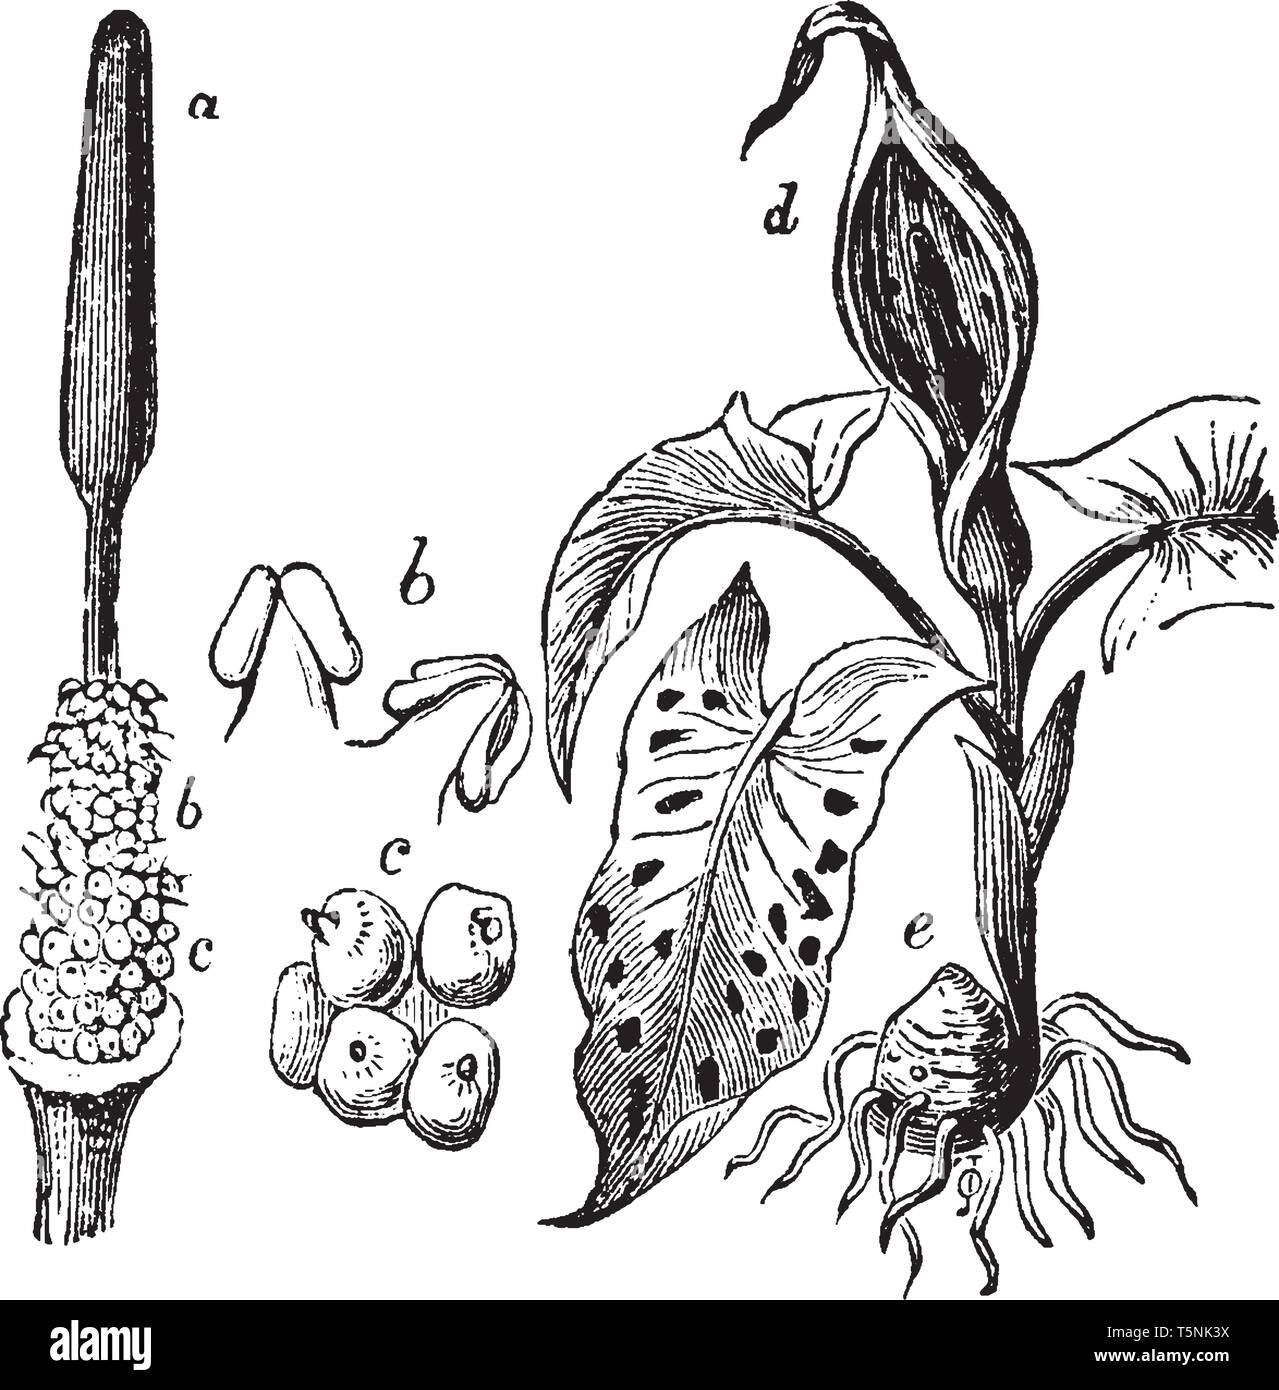 Questa immagine mostra vegetali di Araceae parte. La parte a illustra spadix, parte b mostra stami o fiori maschili, parte c mostra ovaie, parte d mostra spathe, vinta Illustrazione Vettoriale